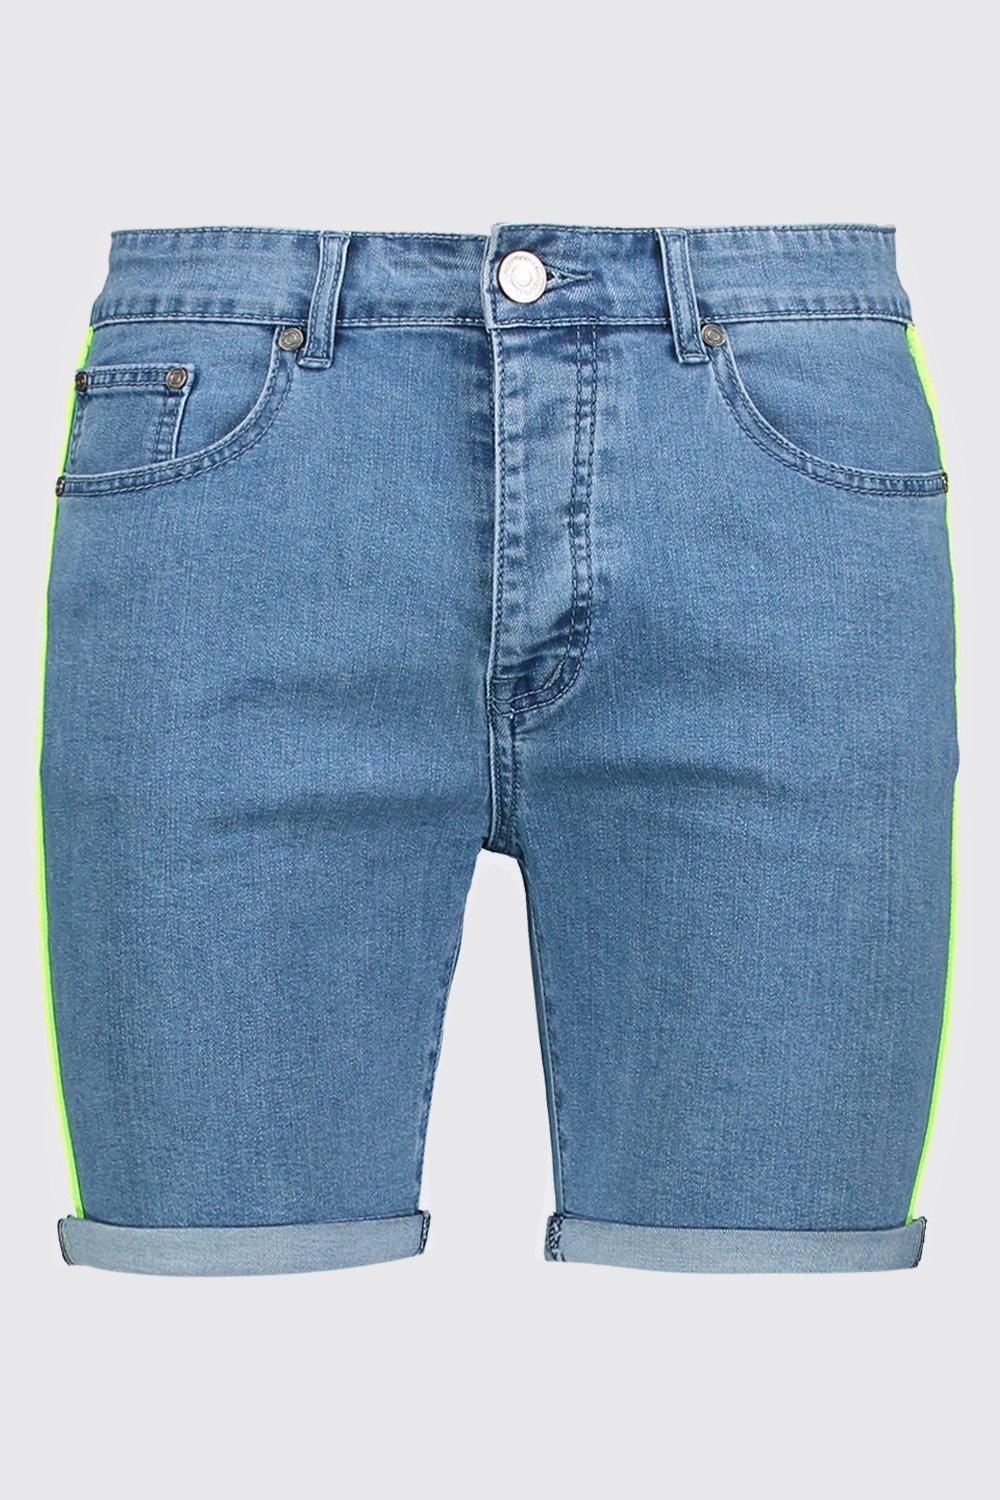 neon jean shorts